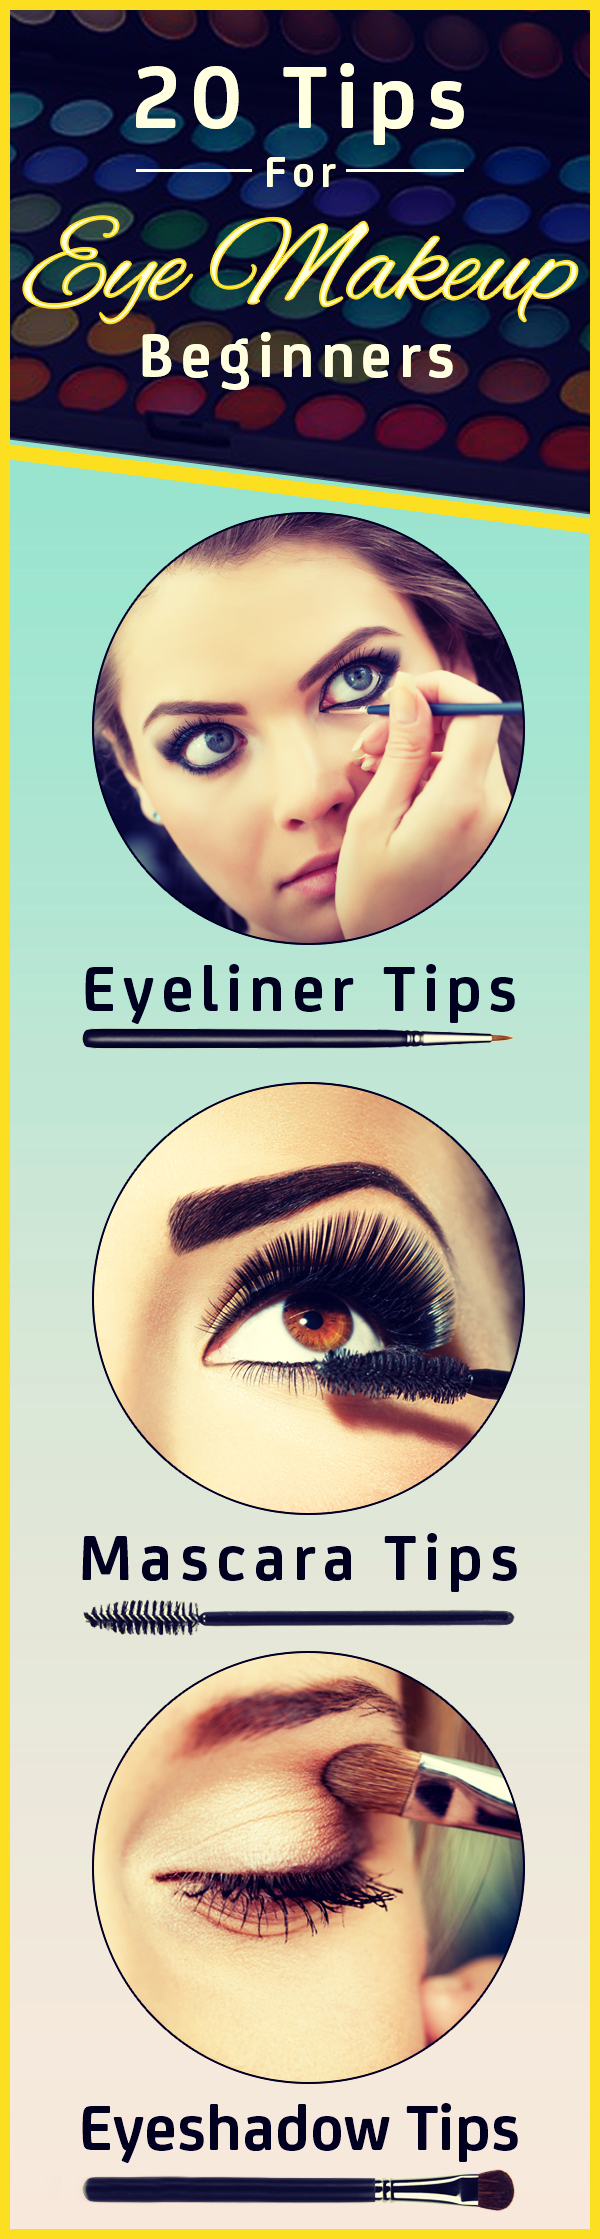 20 Eye Makeup Tips For Beginners